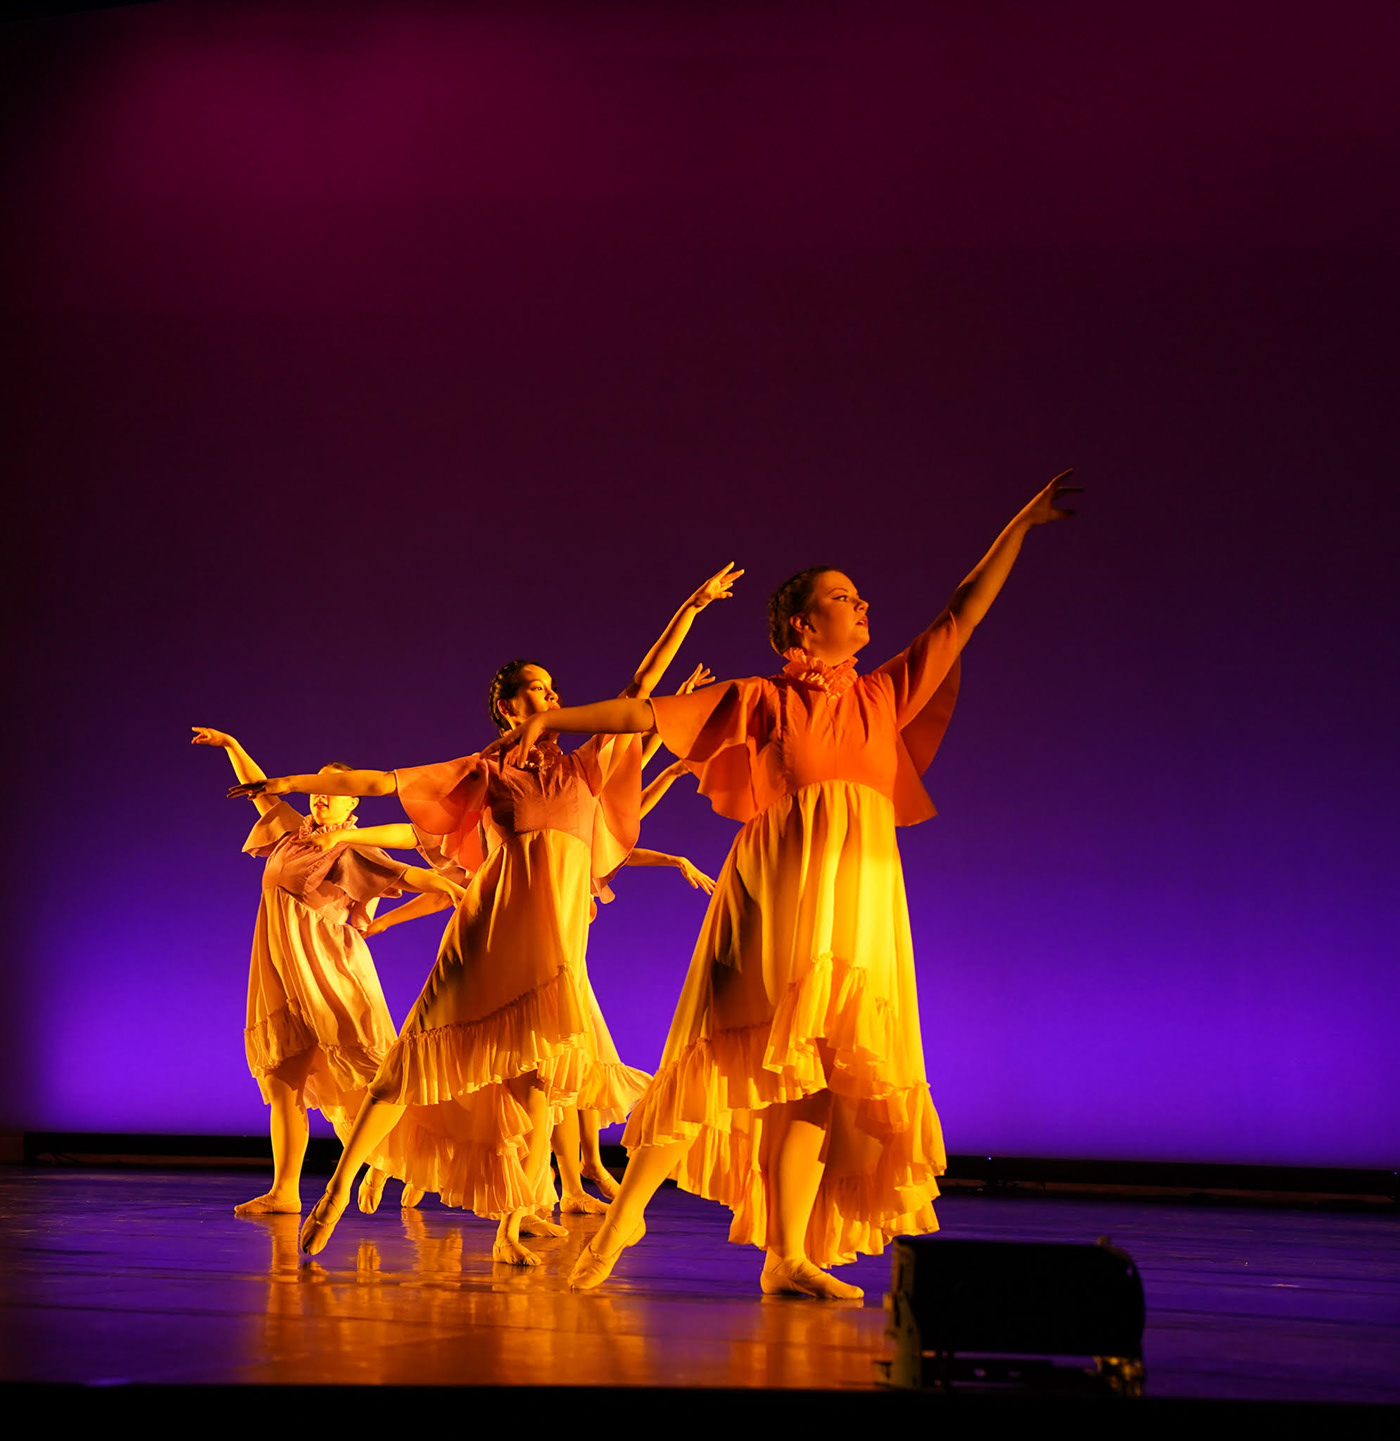 Wheaton College Dance Company
Photographer: @swansburg_media